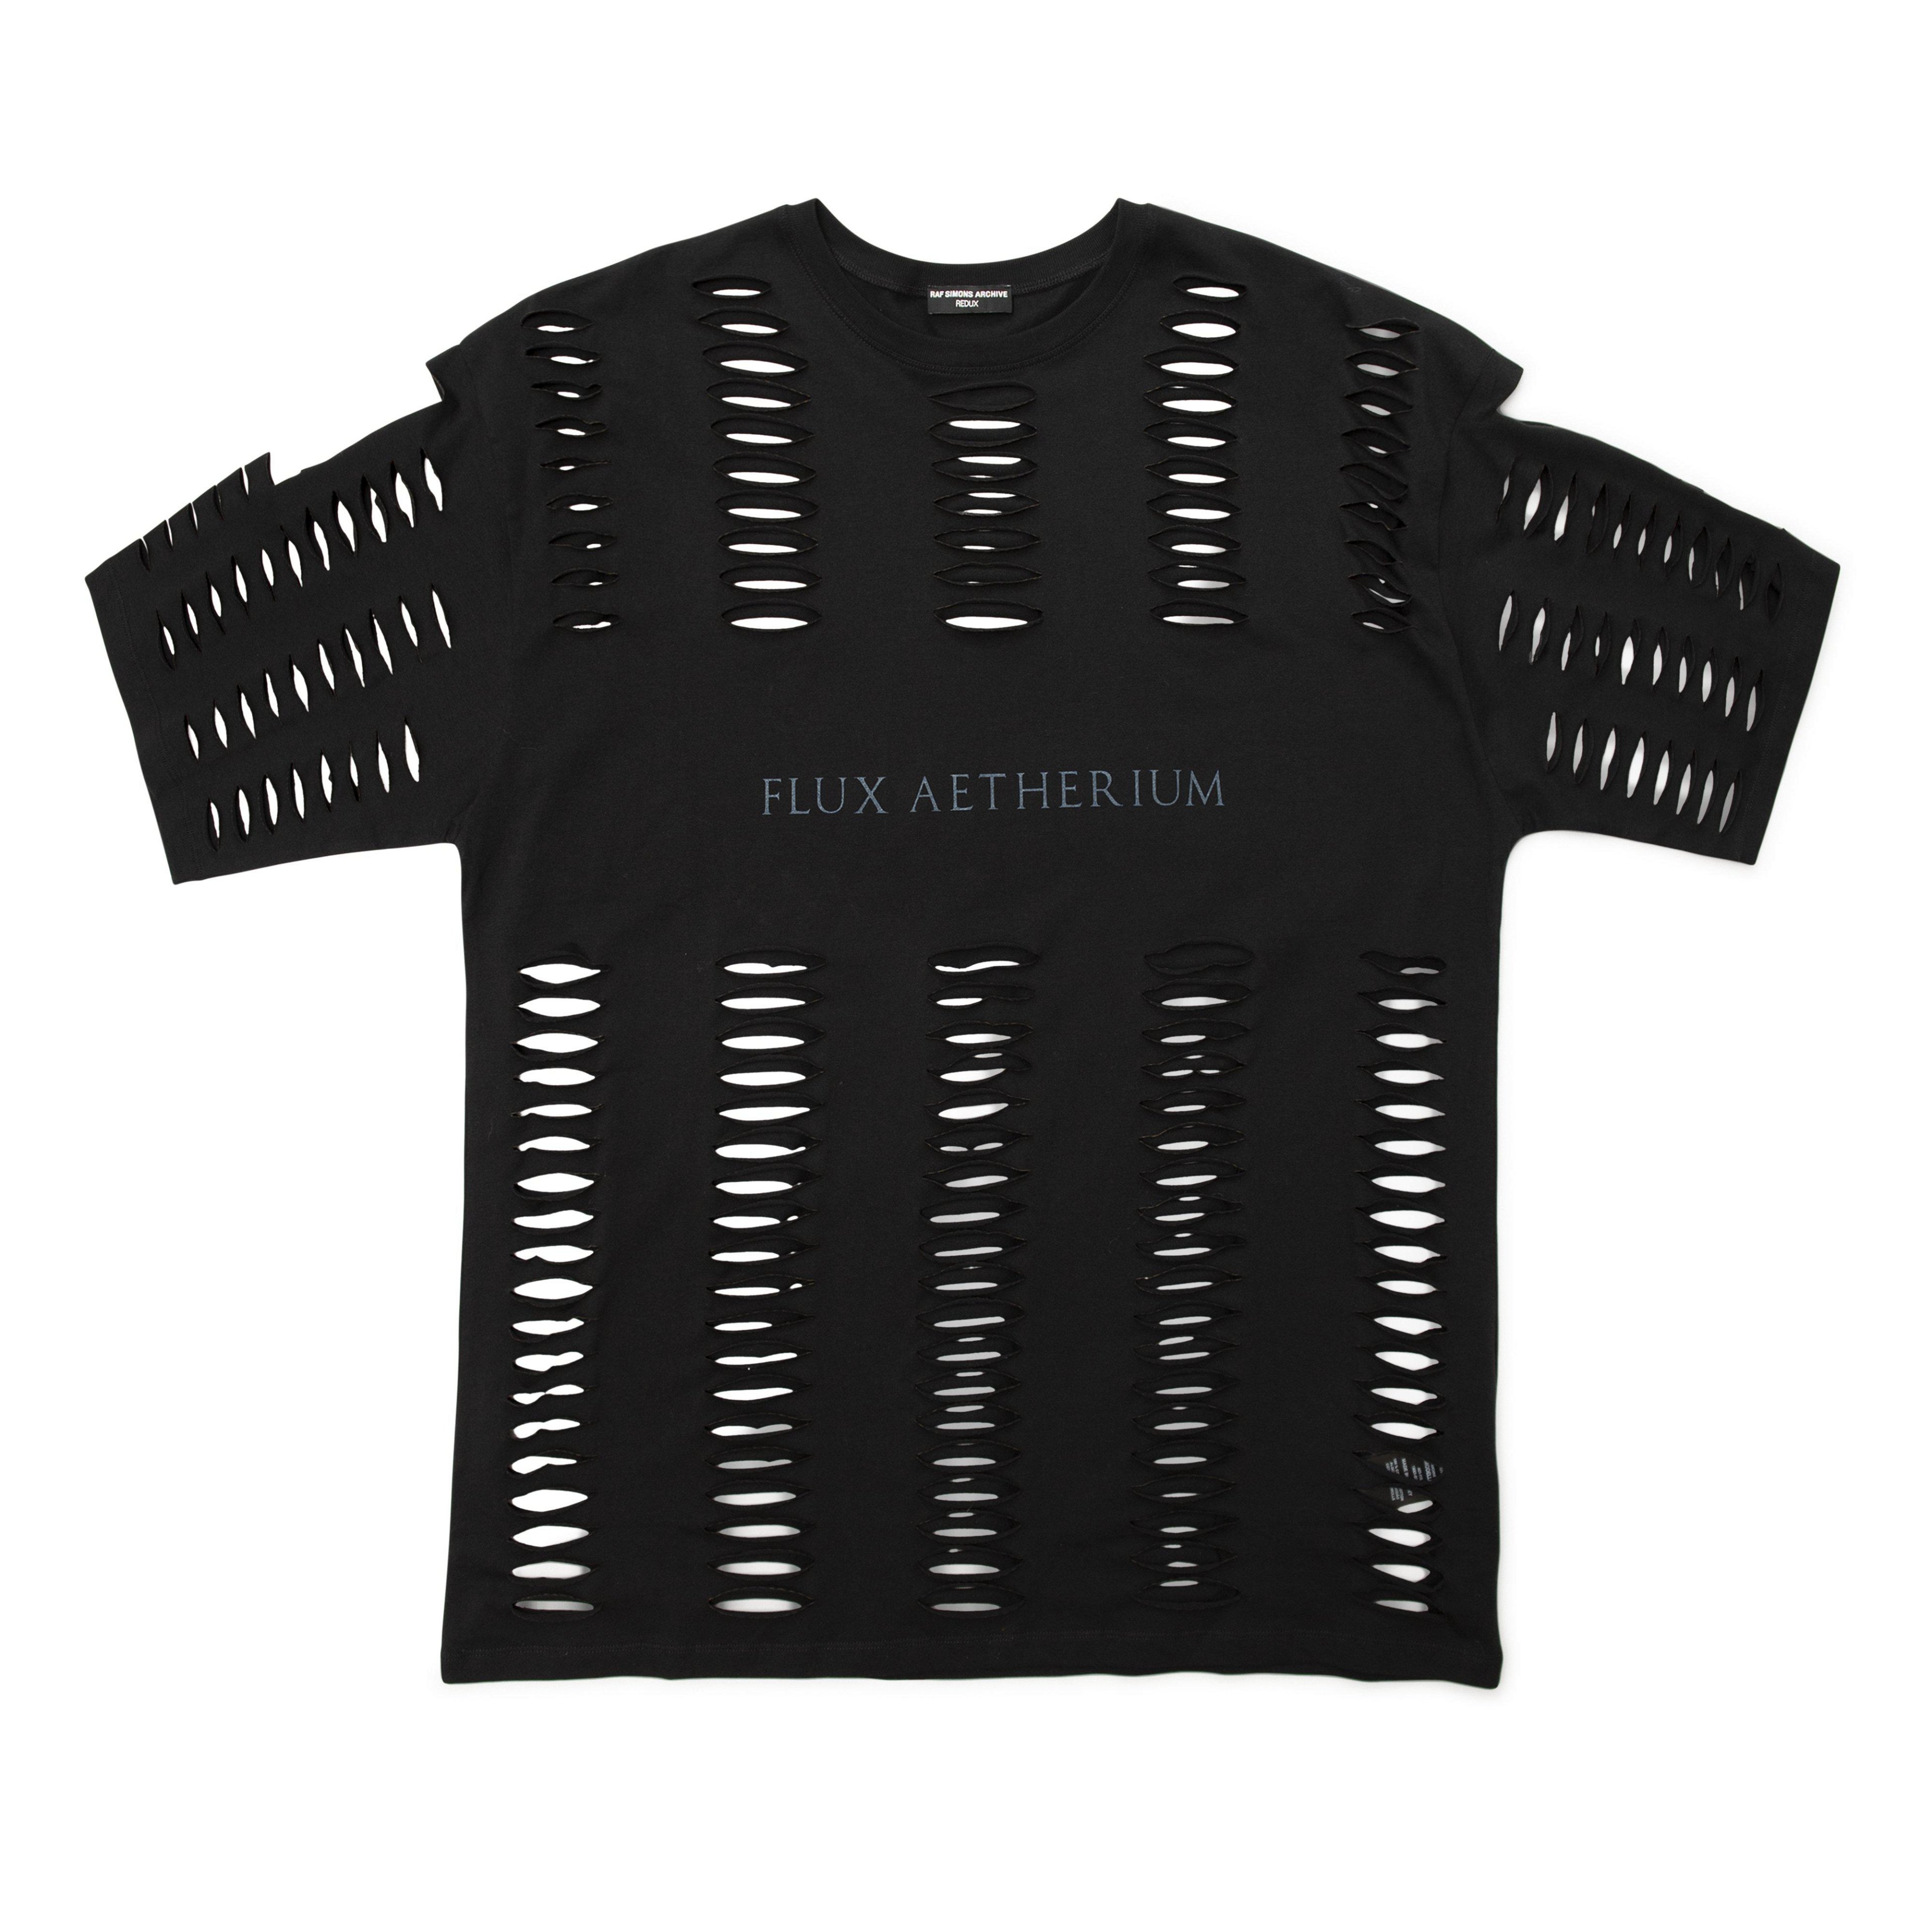 Raf Archive Redux Ss T-Shirt W Cuts And Print (Black) by CUTS